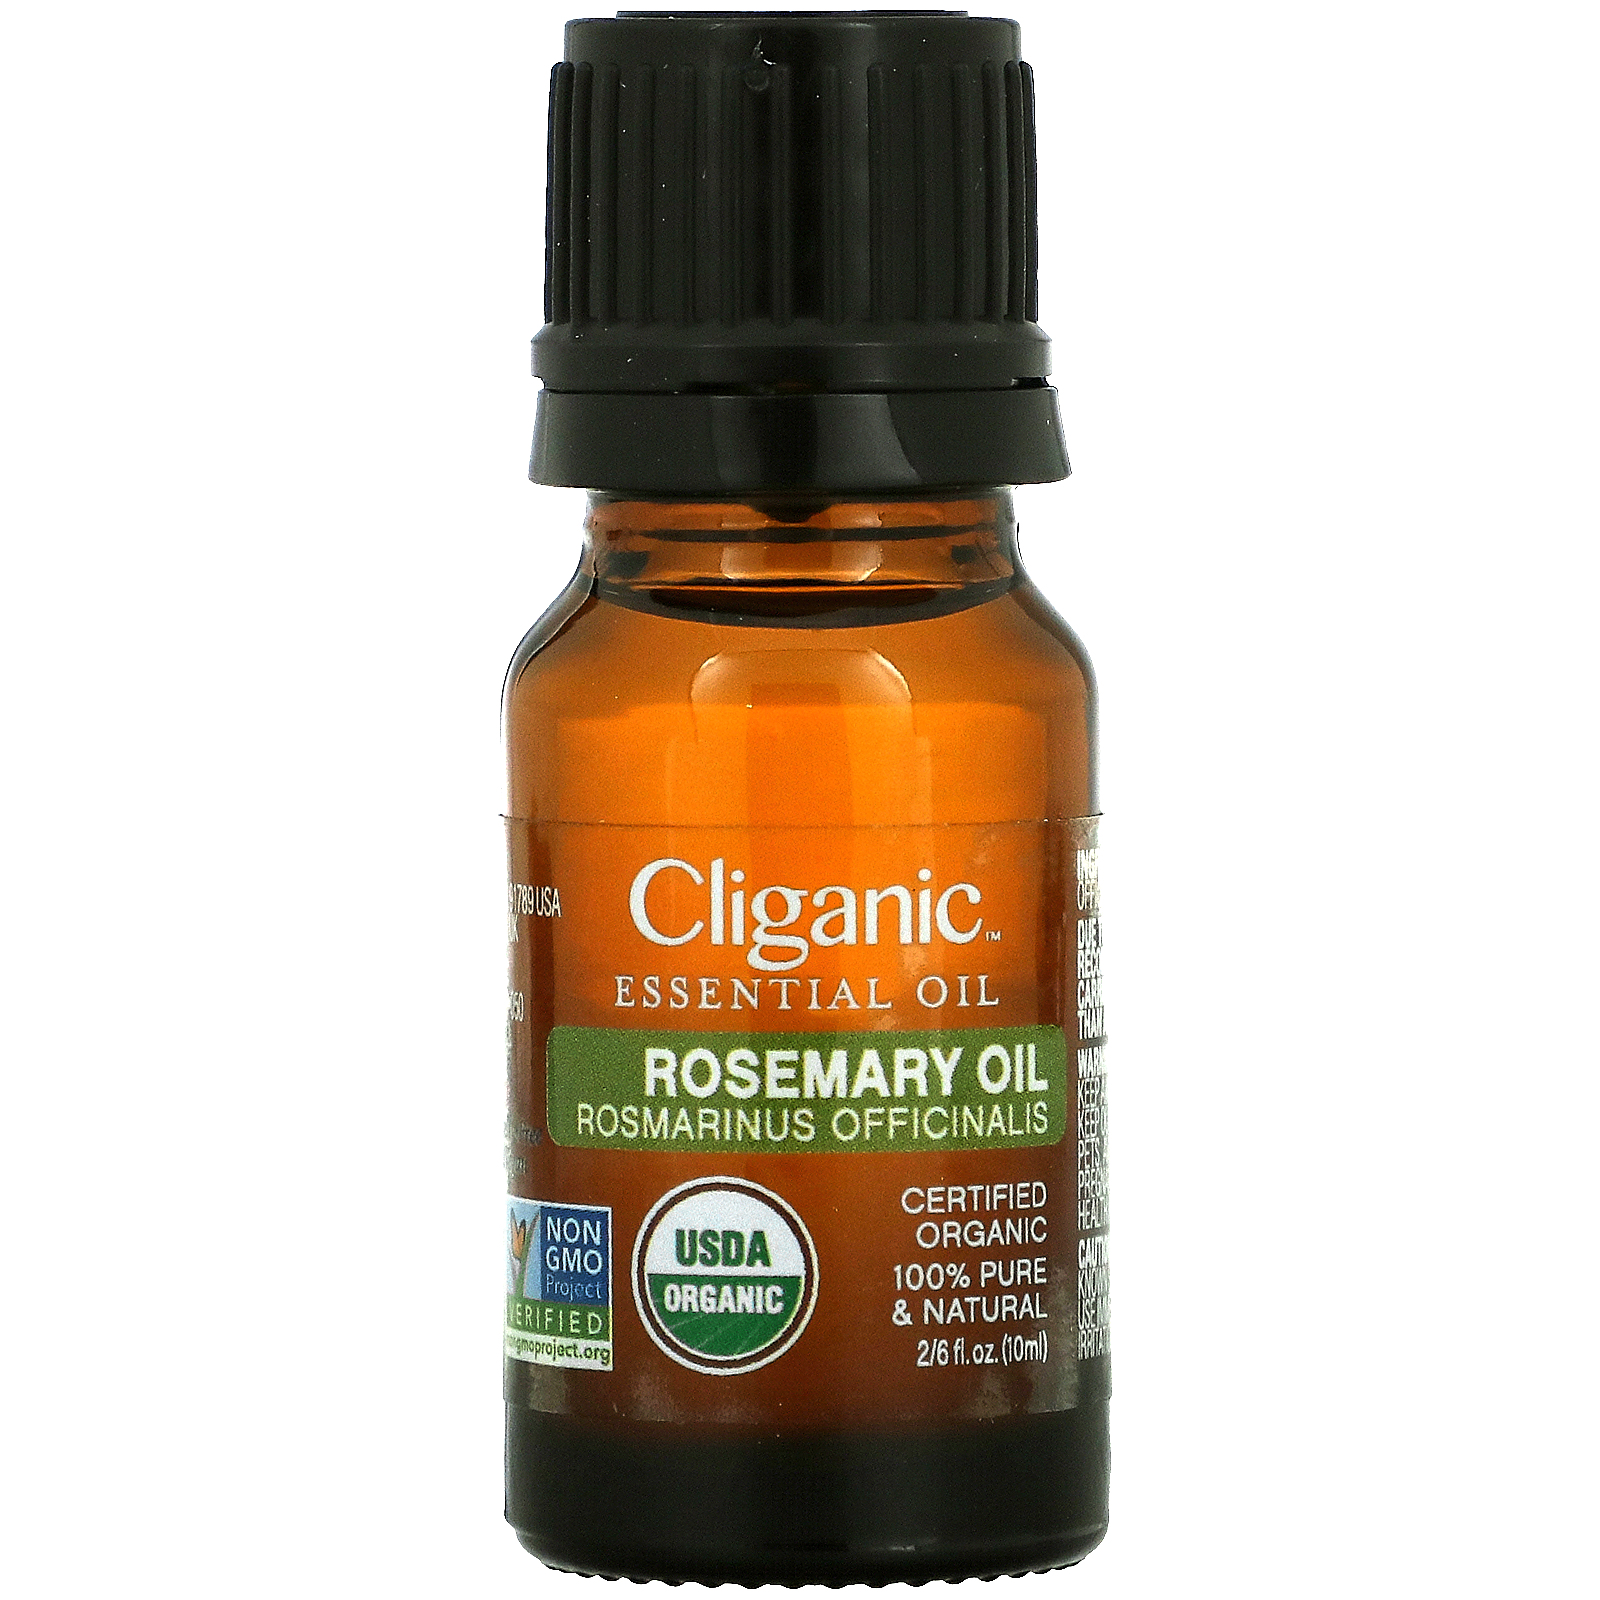 Cliganic, 100% Pure Essential Oil, Rosemary Oil, 0.33 fl oz (10ml)